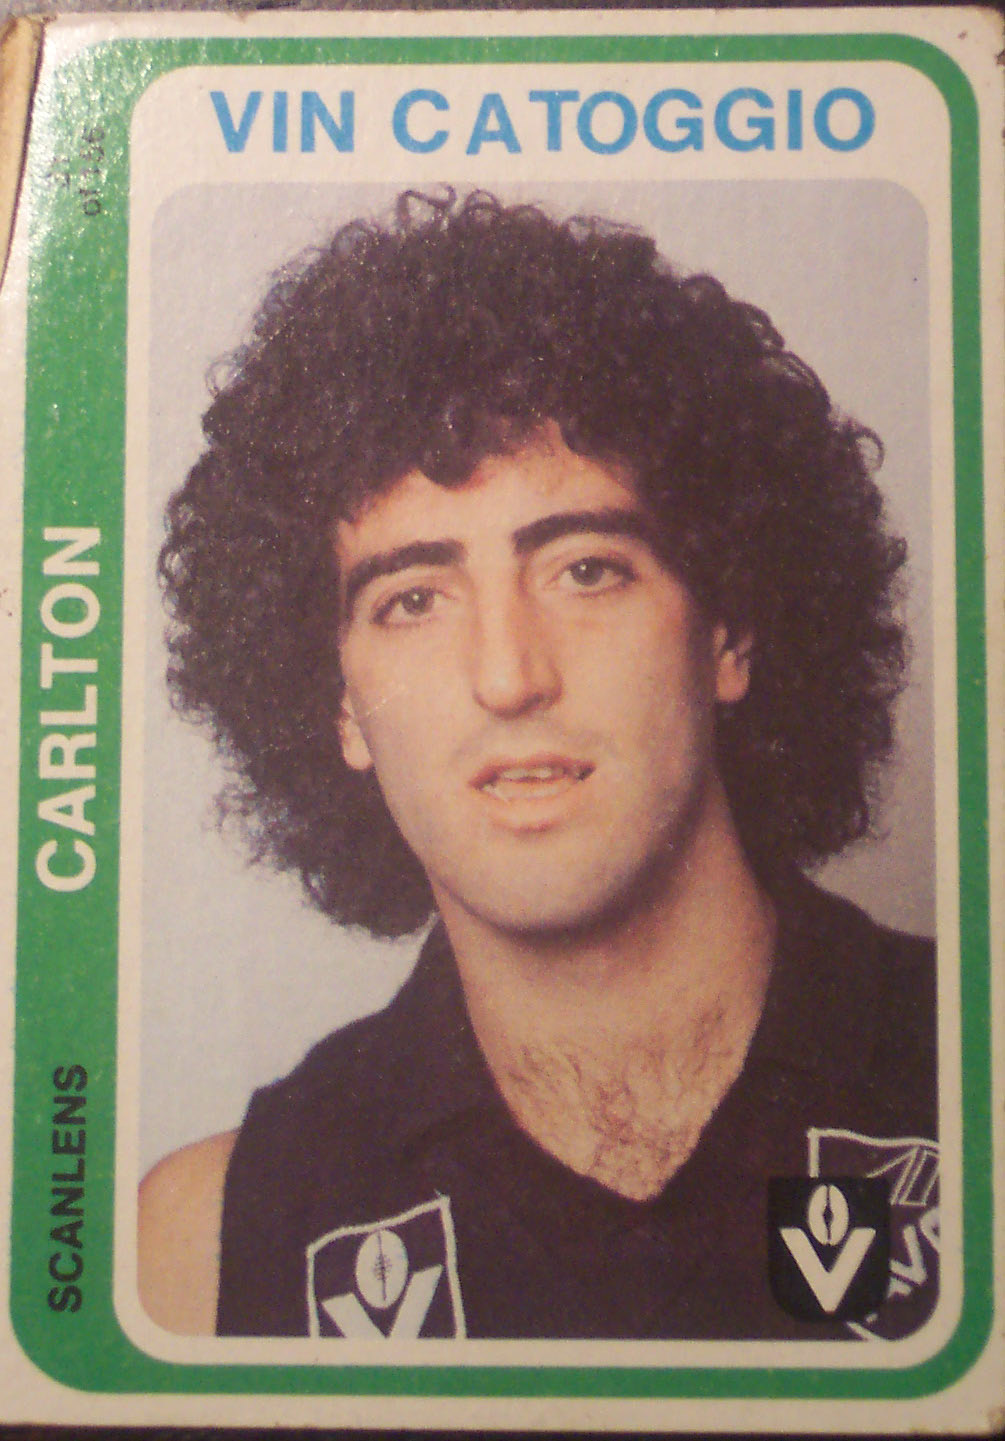 1979 - Vin Catoggio (Scanlen's Footy Card).